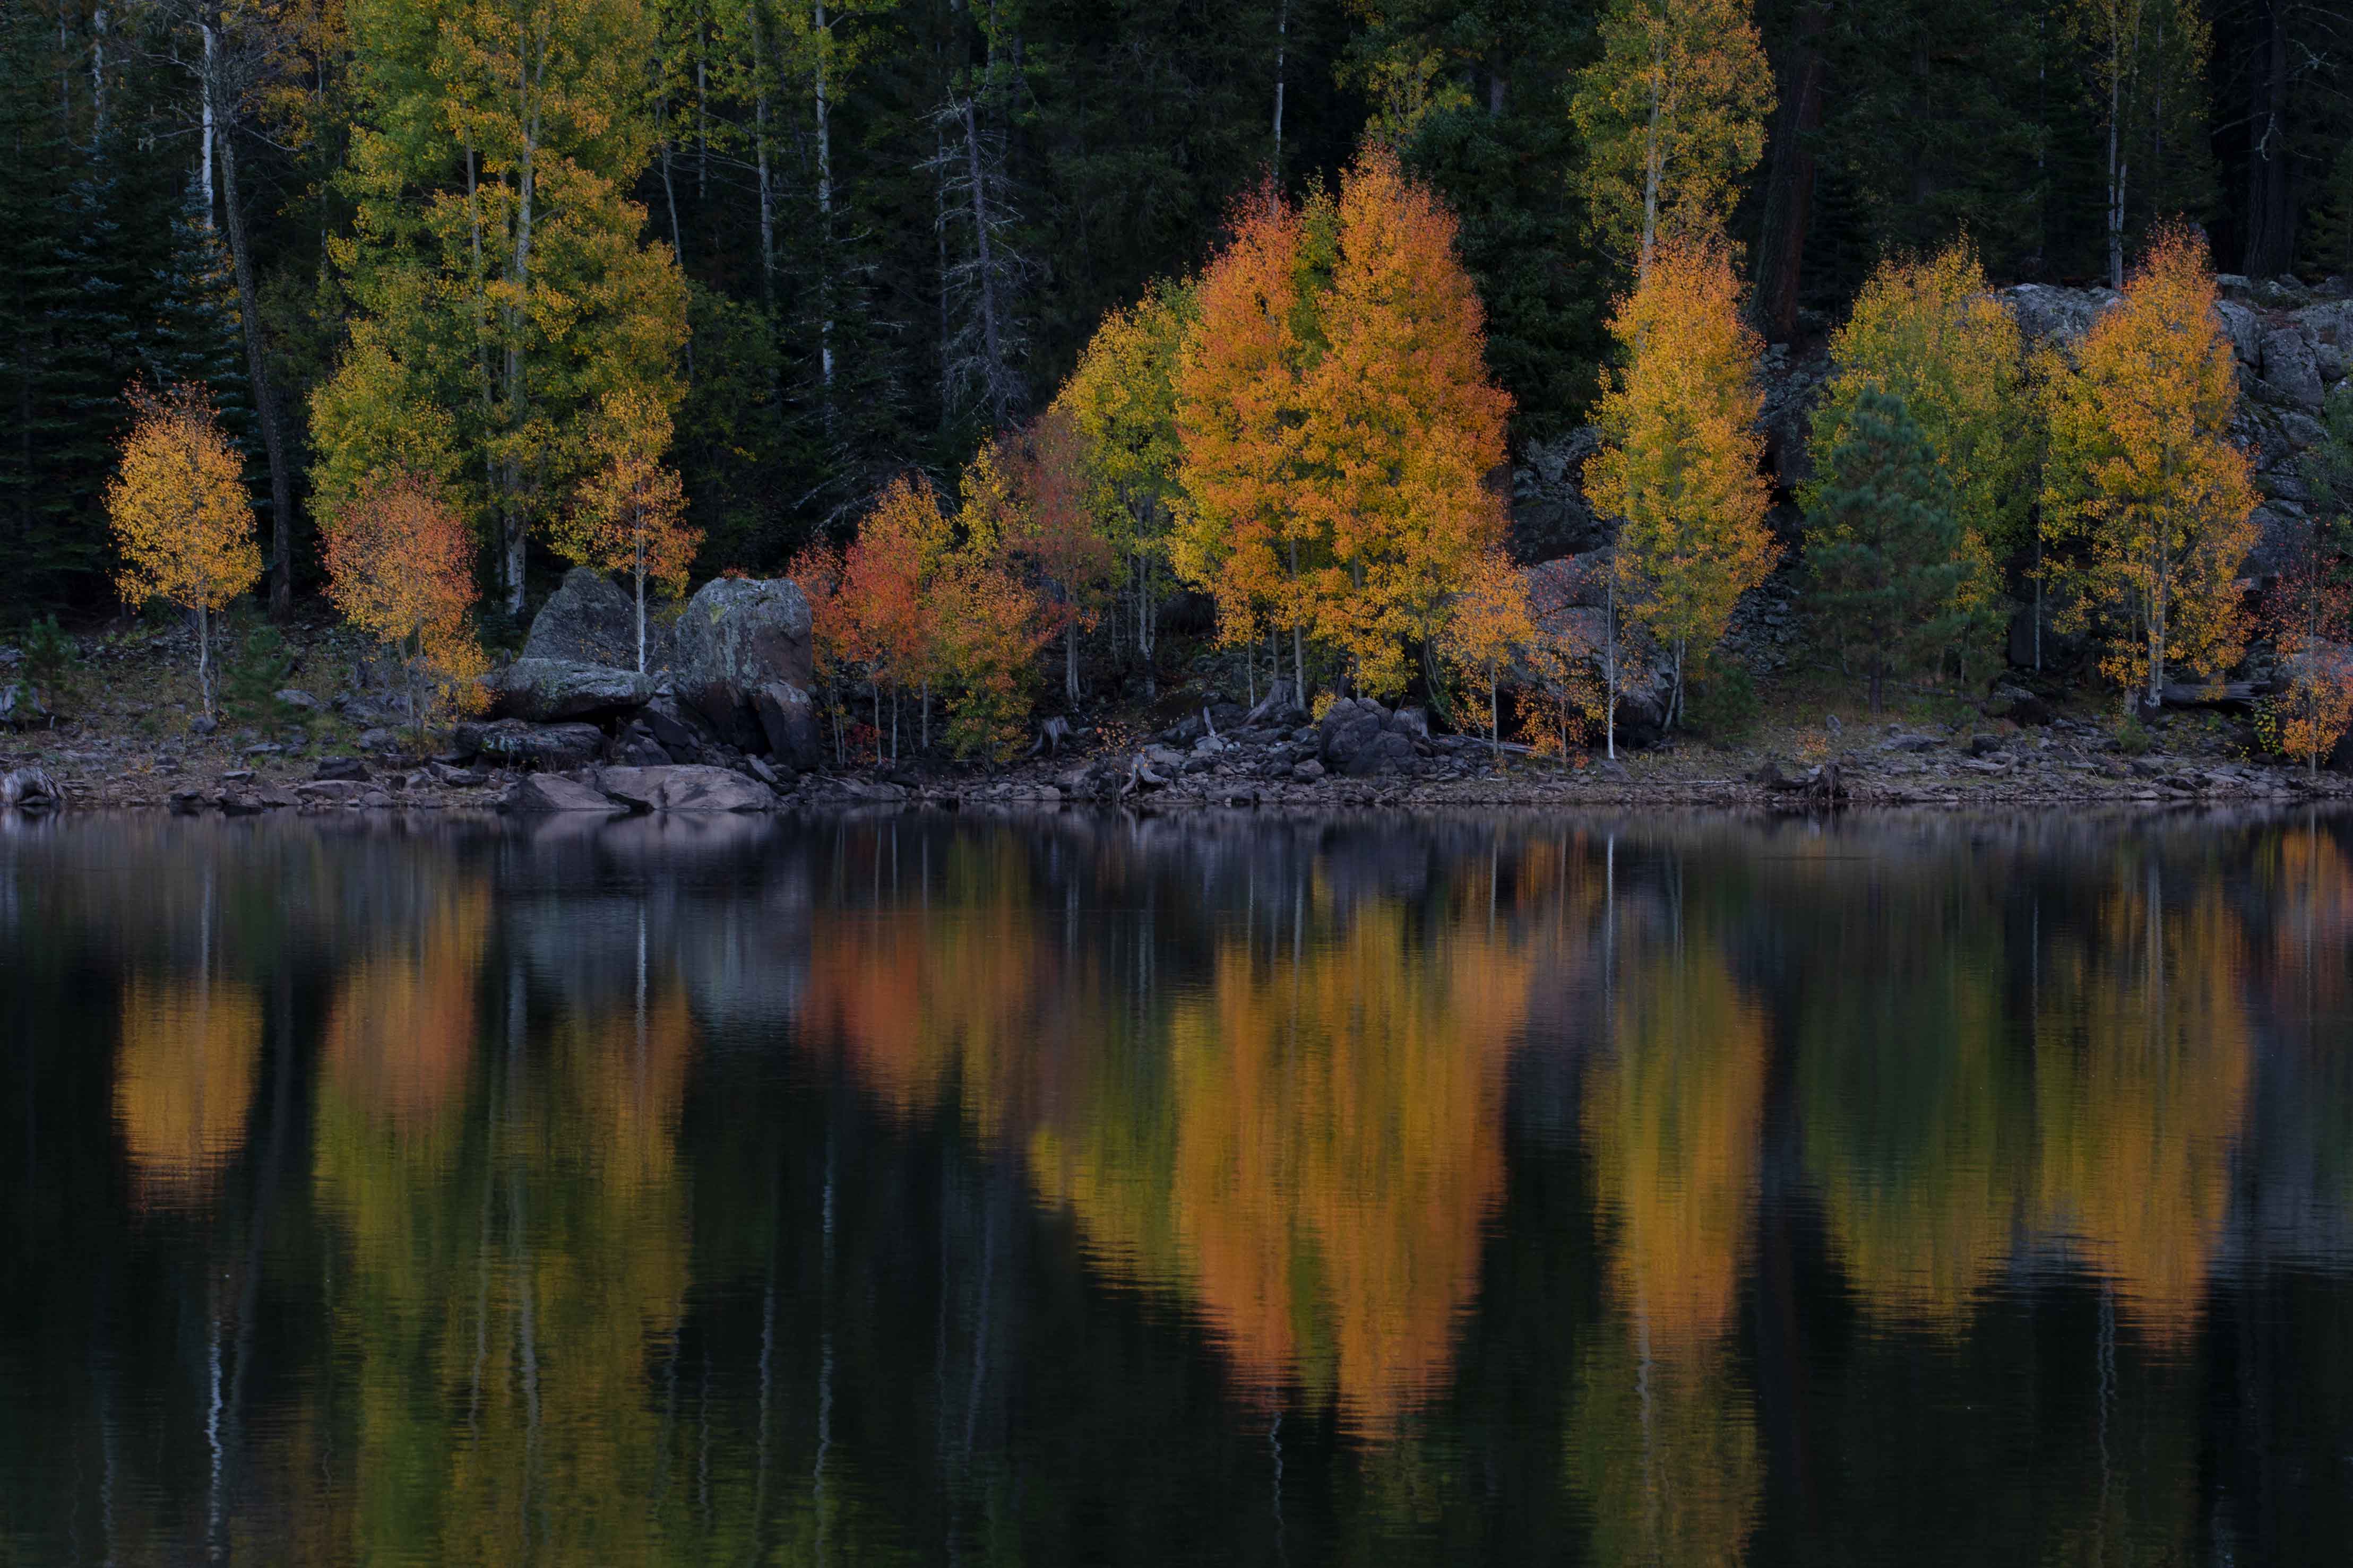 Autumn aspen trees at A-1 Lake in the White Mts. of eastern Arizona.
